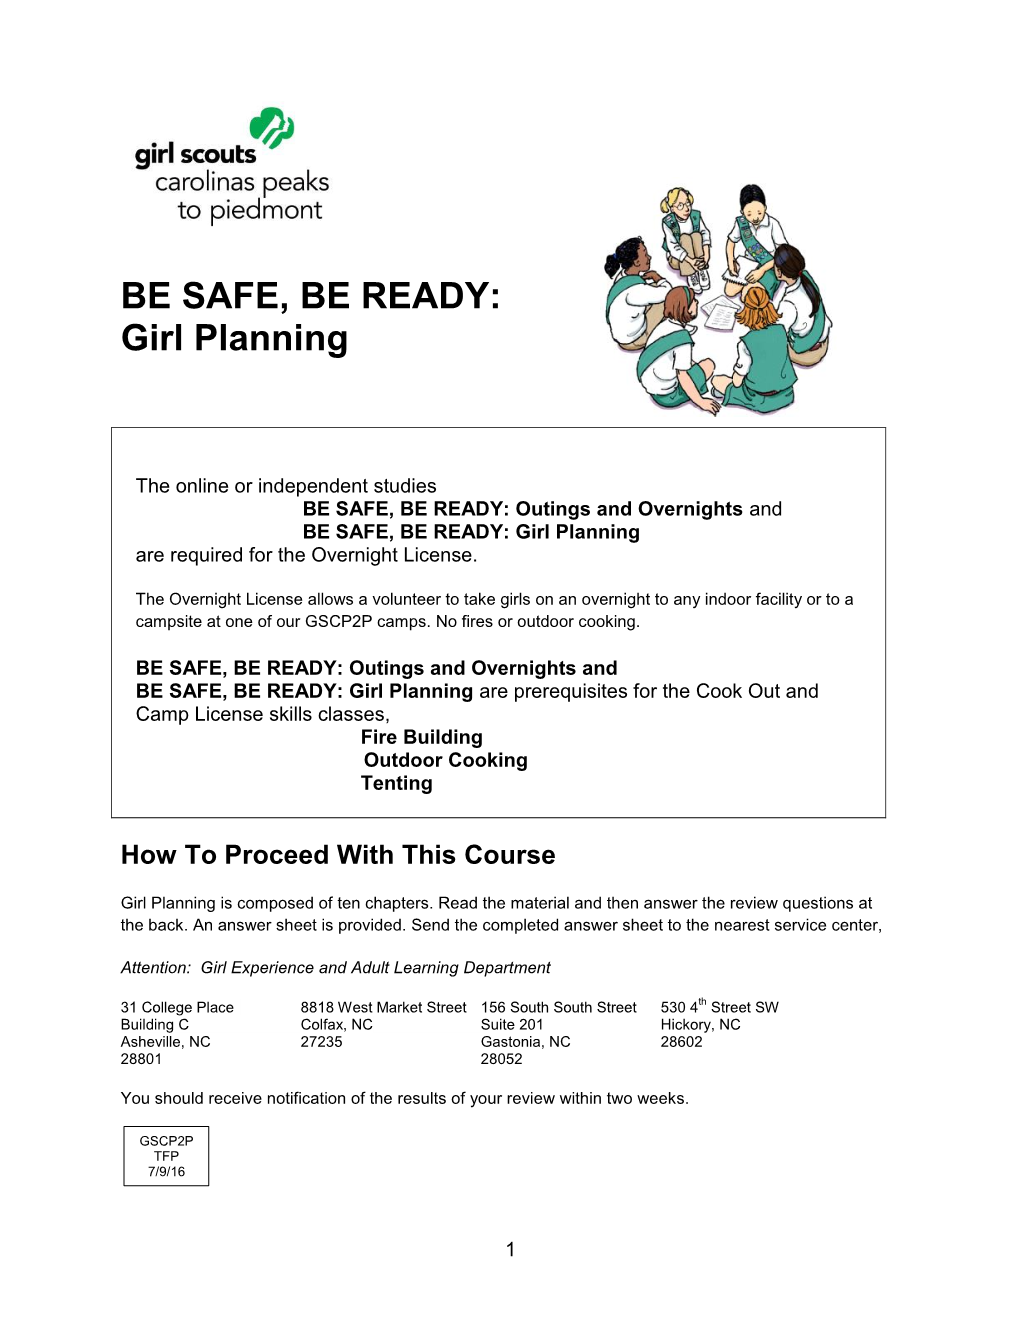 Girl Planning